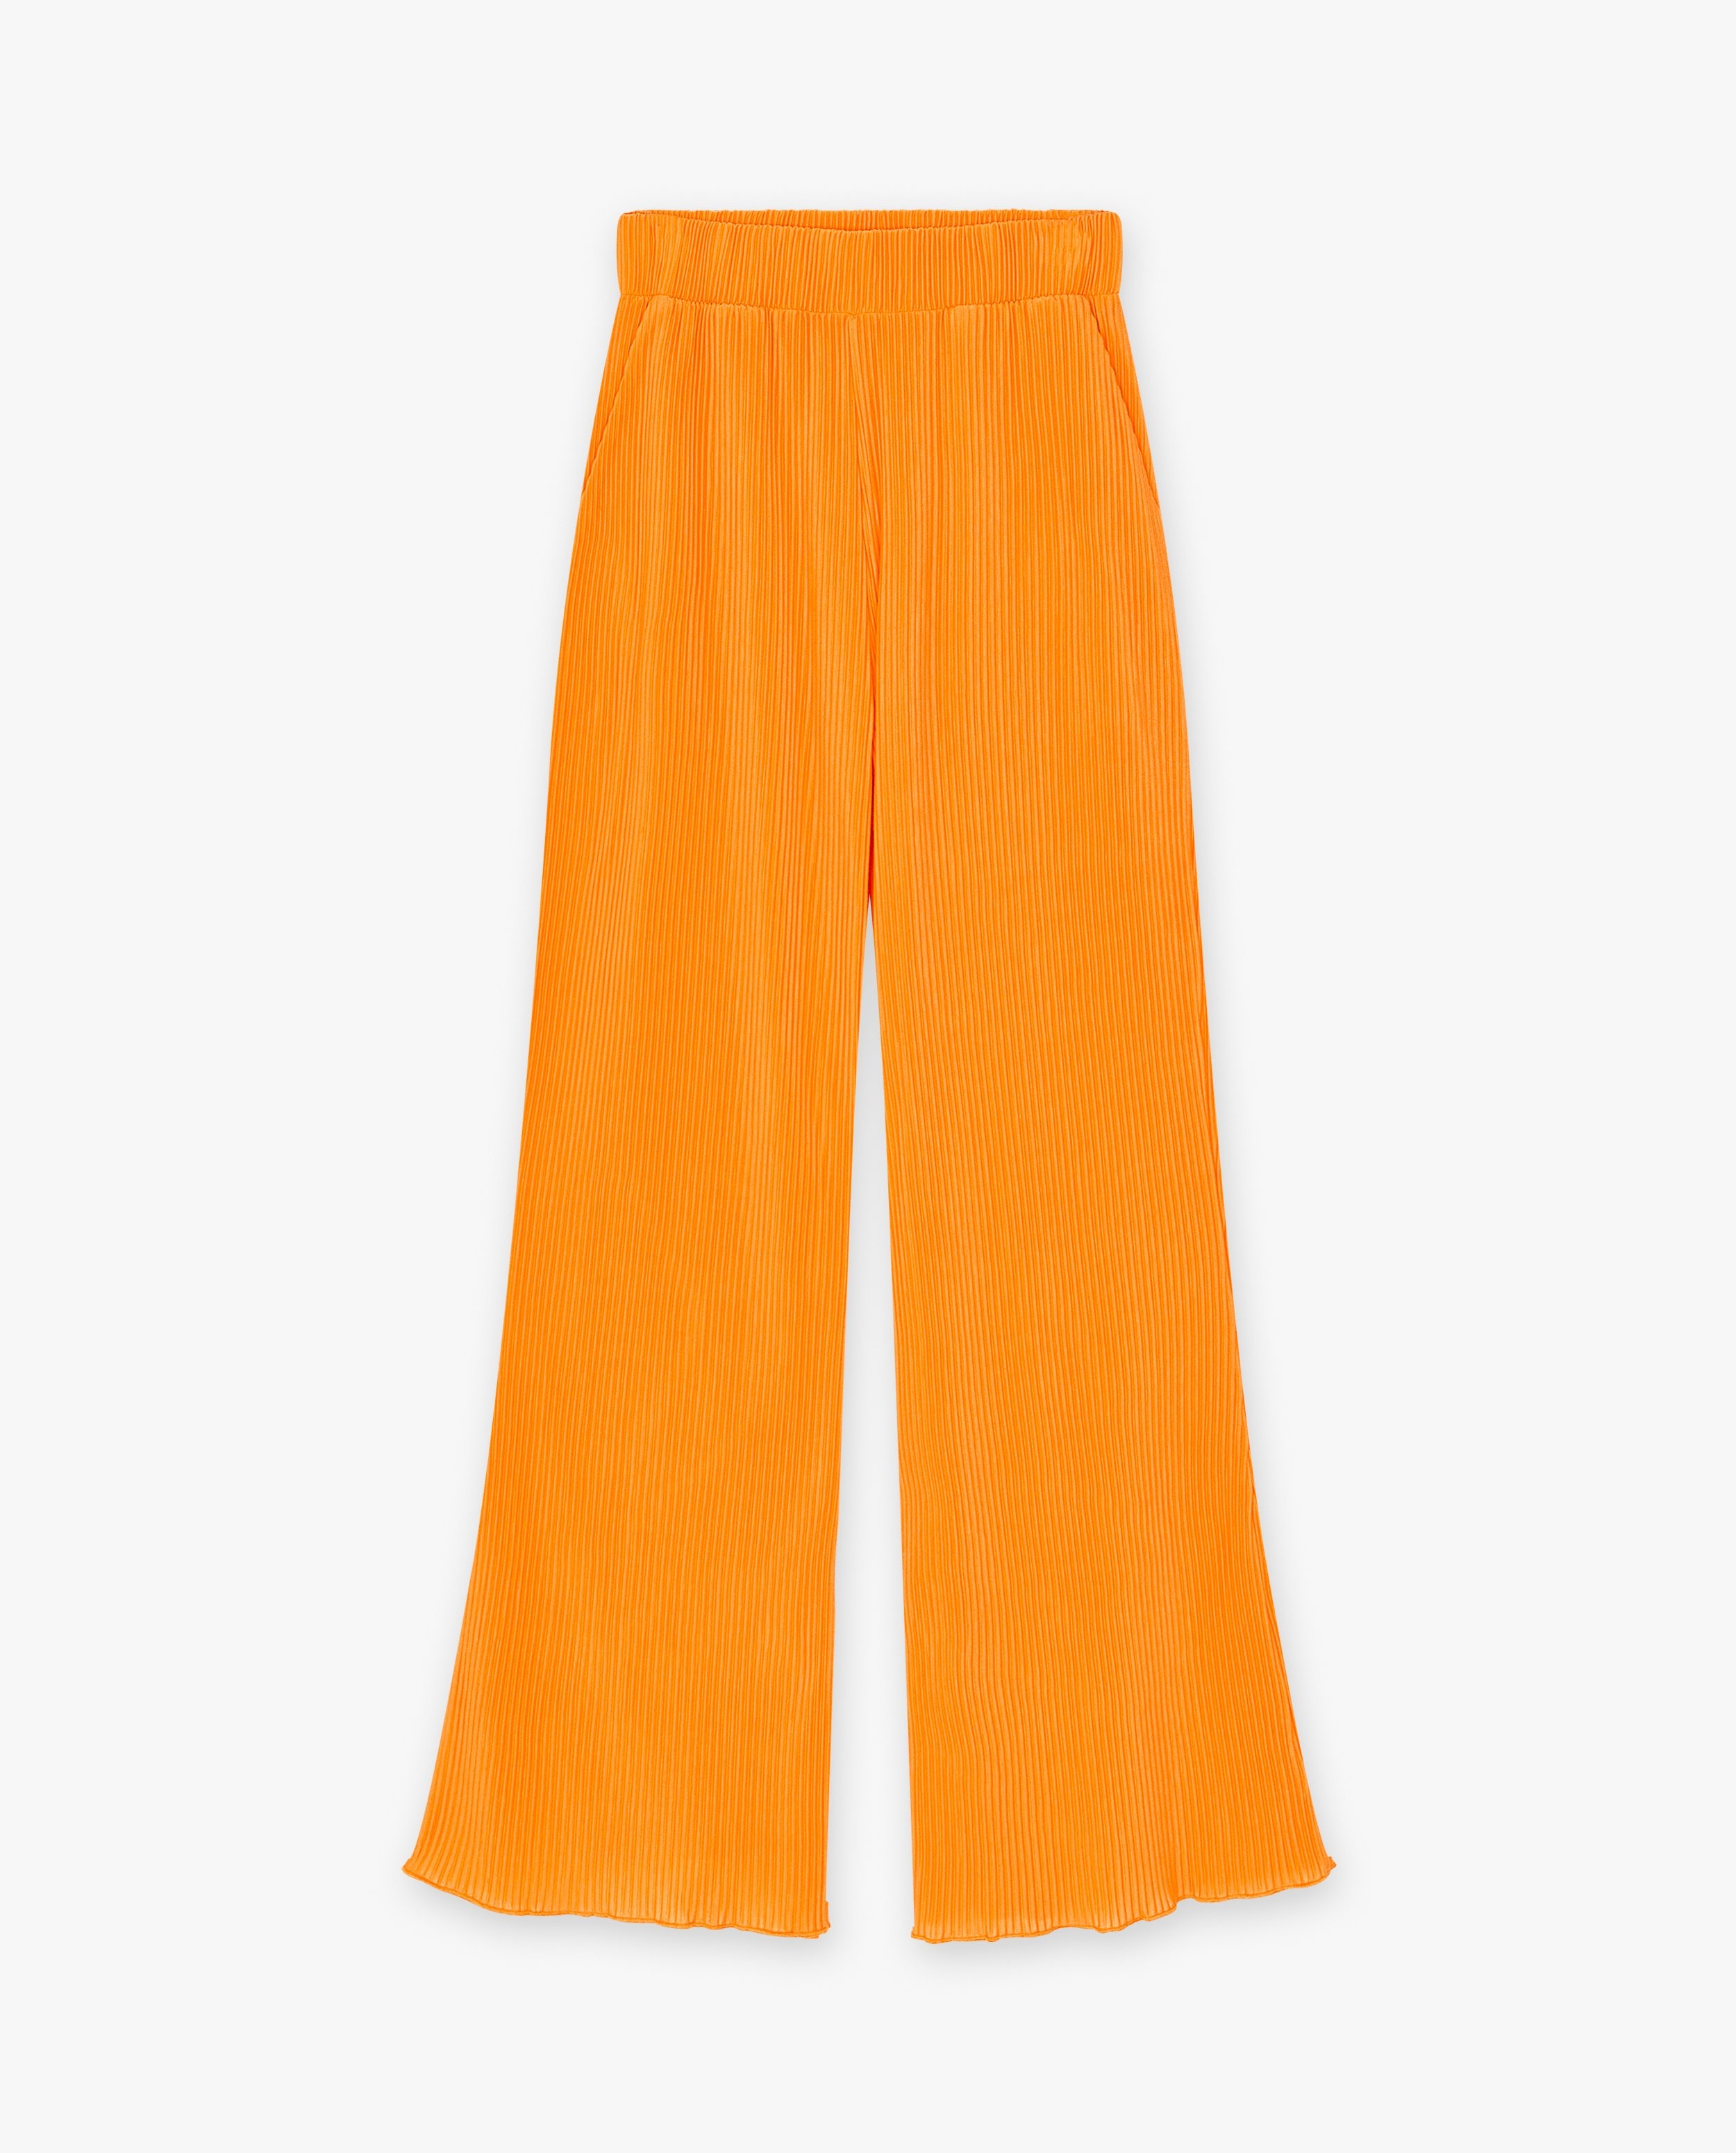 Pantalons - Pantalon orange à jambes larges